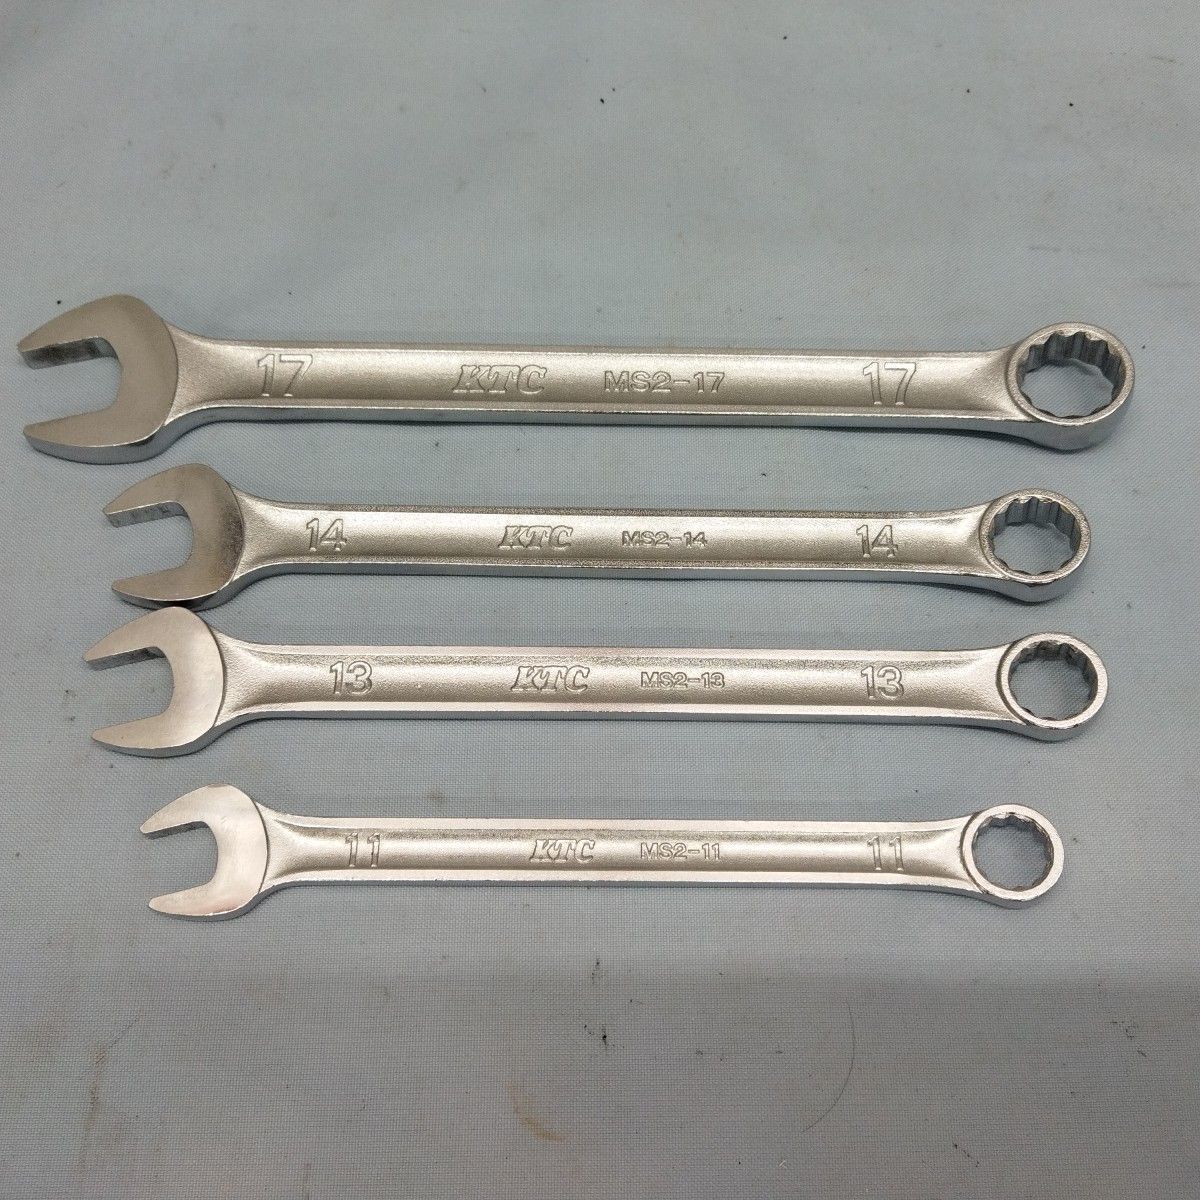 KTC MS2-11*13*14*17 combination wrench 4 pcs set *3116/ tool . bamboo shop 